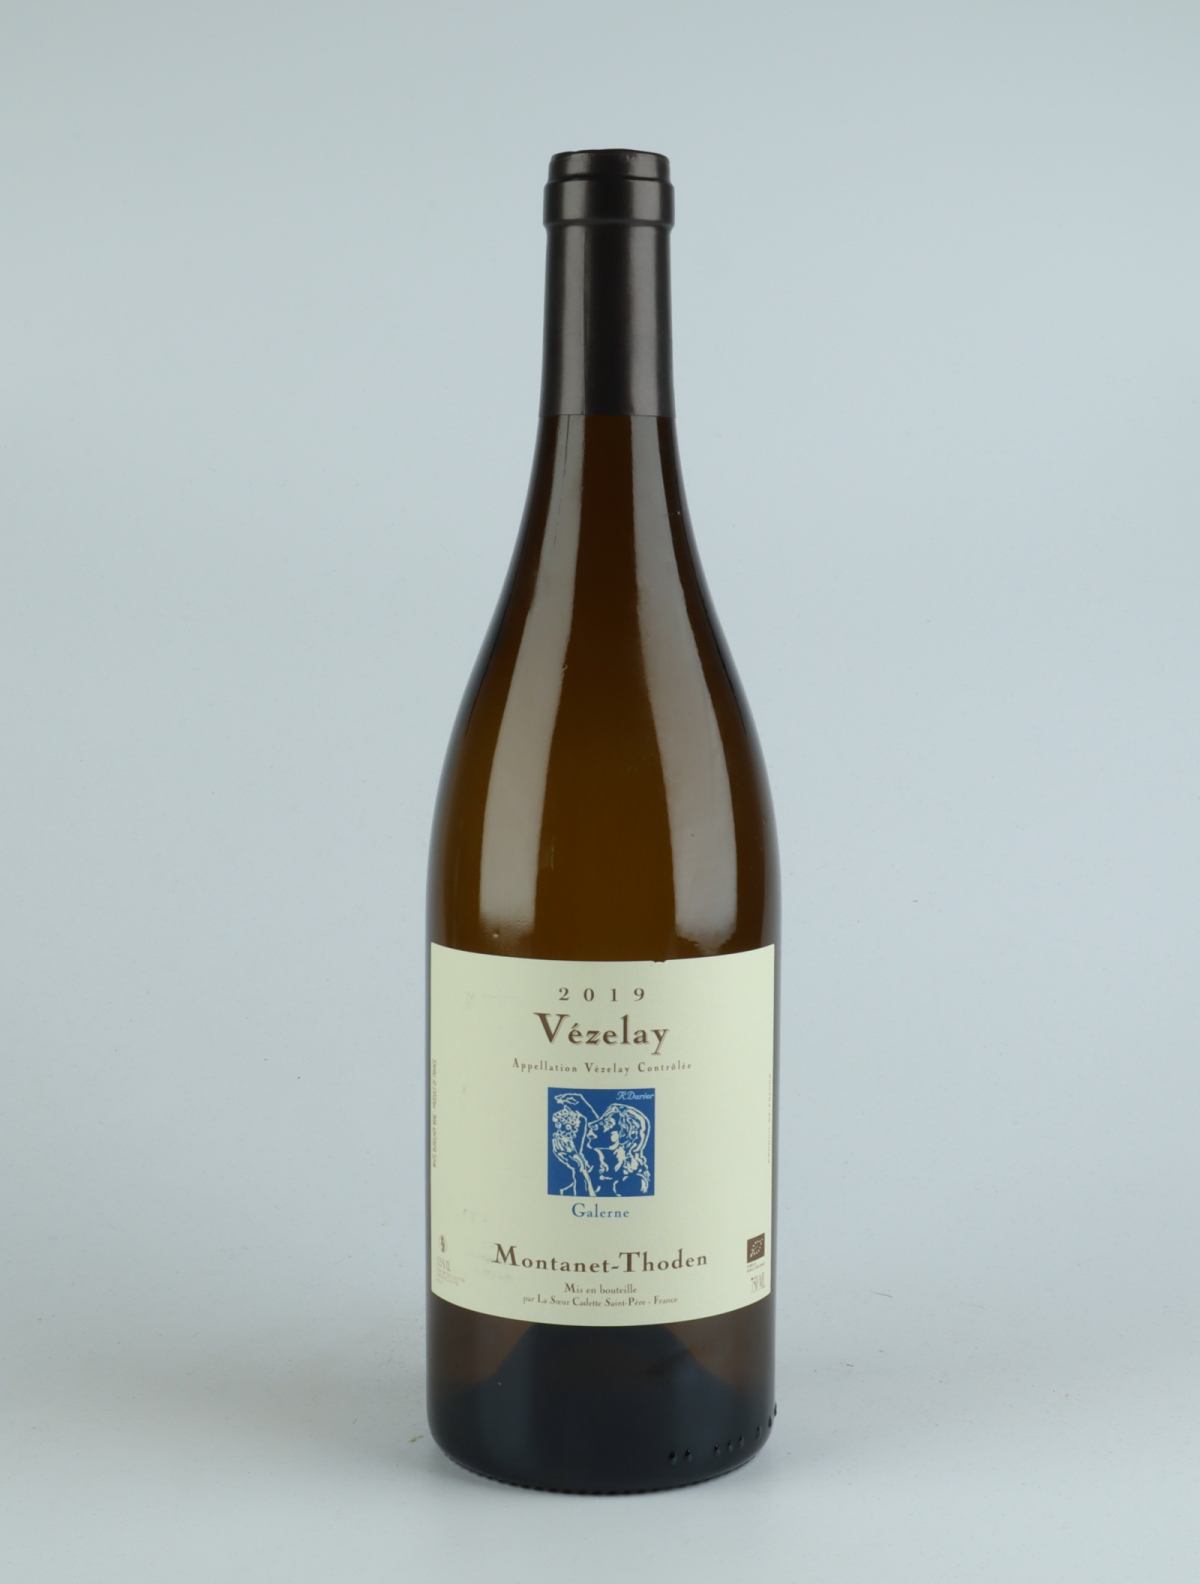 A bottle 2019 Bourgogne Vézelay - Galerne White wine from Domaine Montanet-Thoden, Burgundy in France